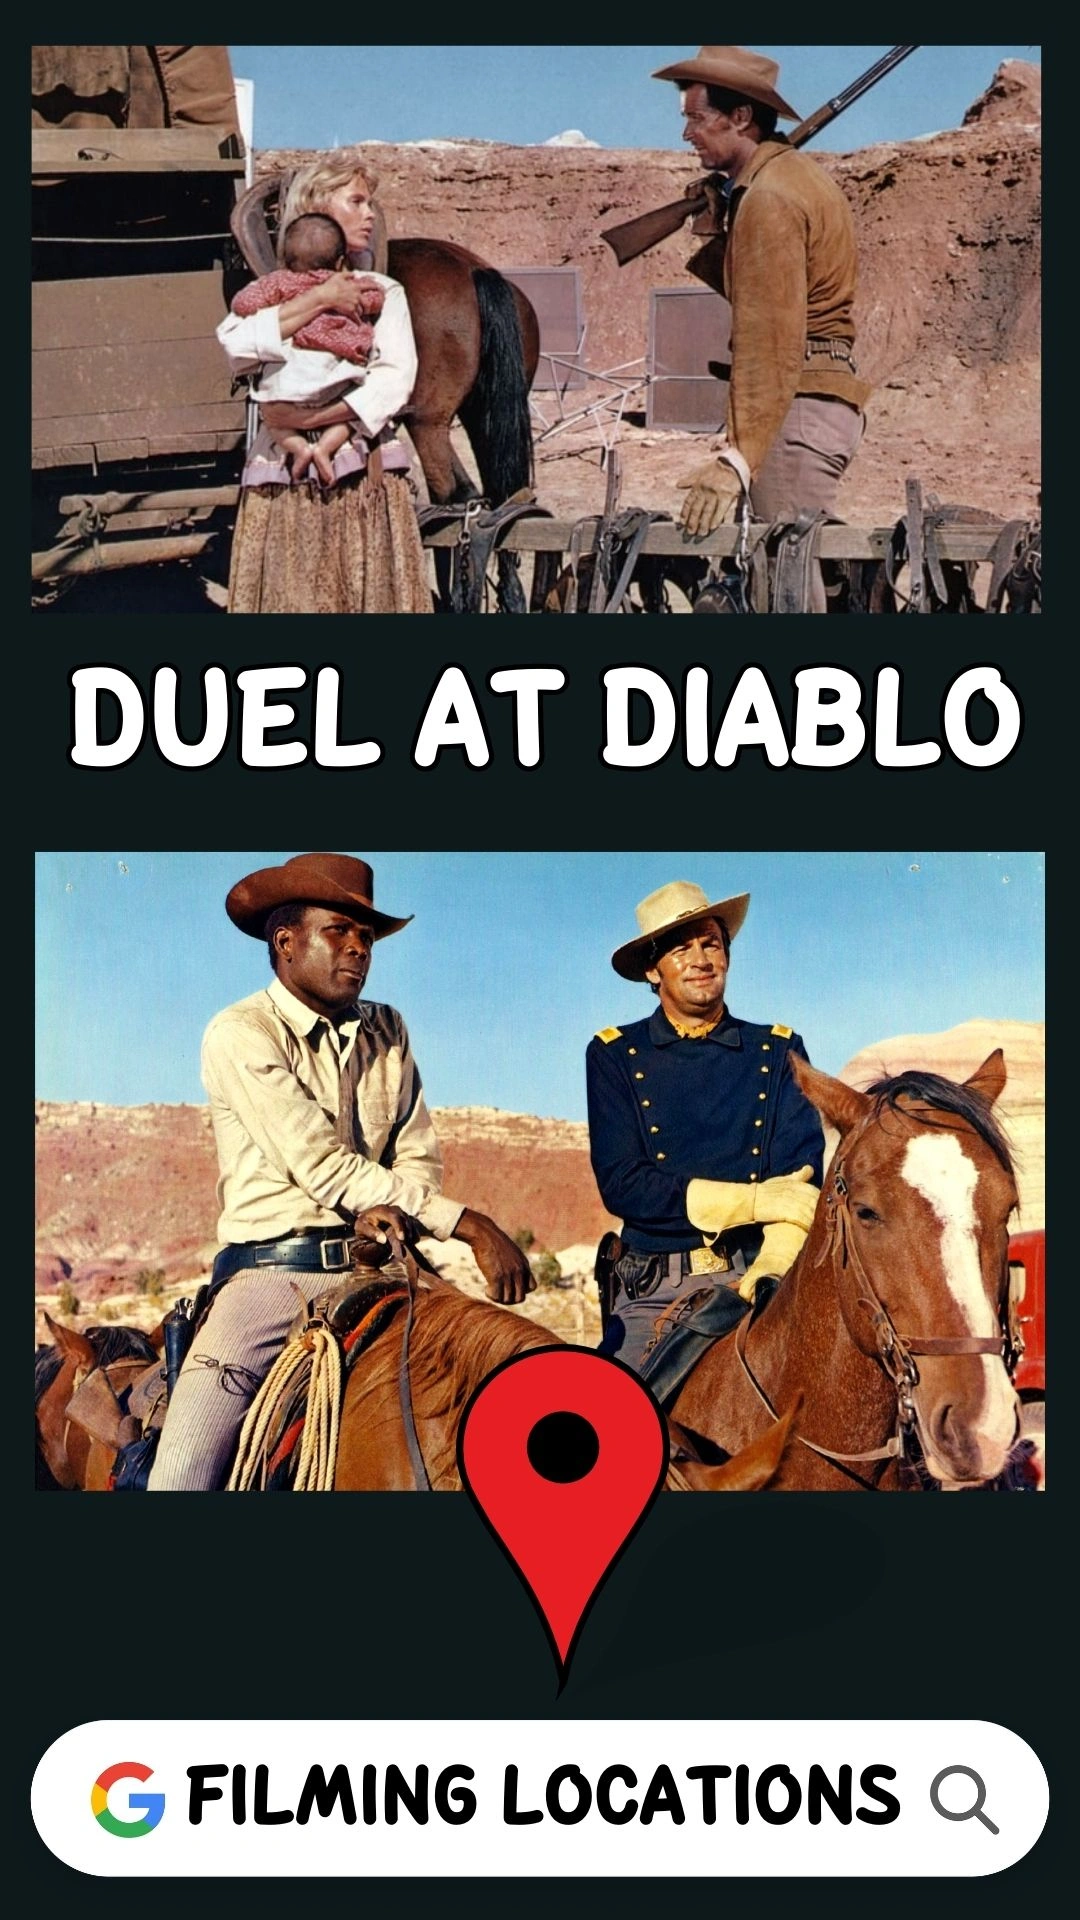 Duel at Diablo Filming Locations